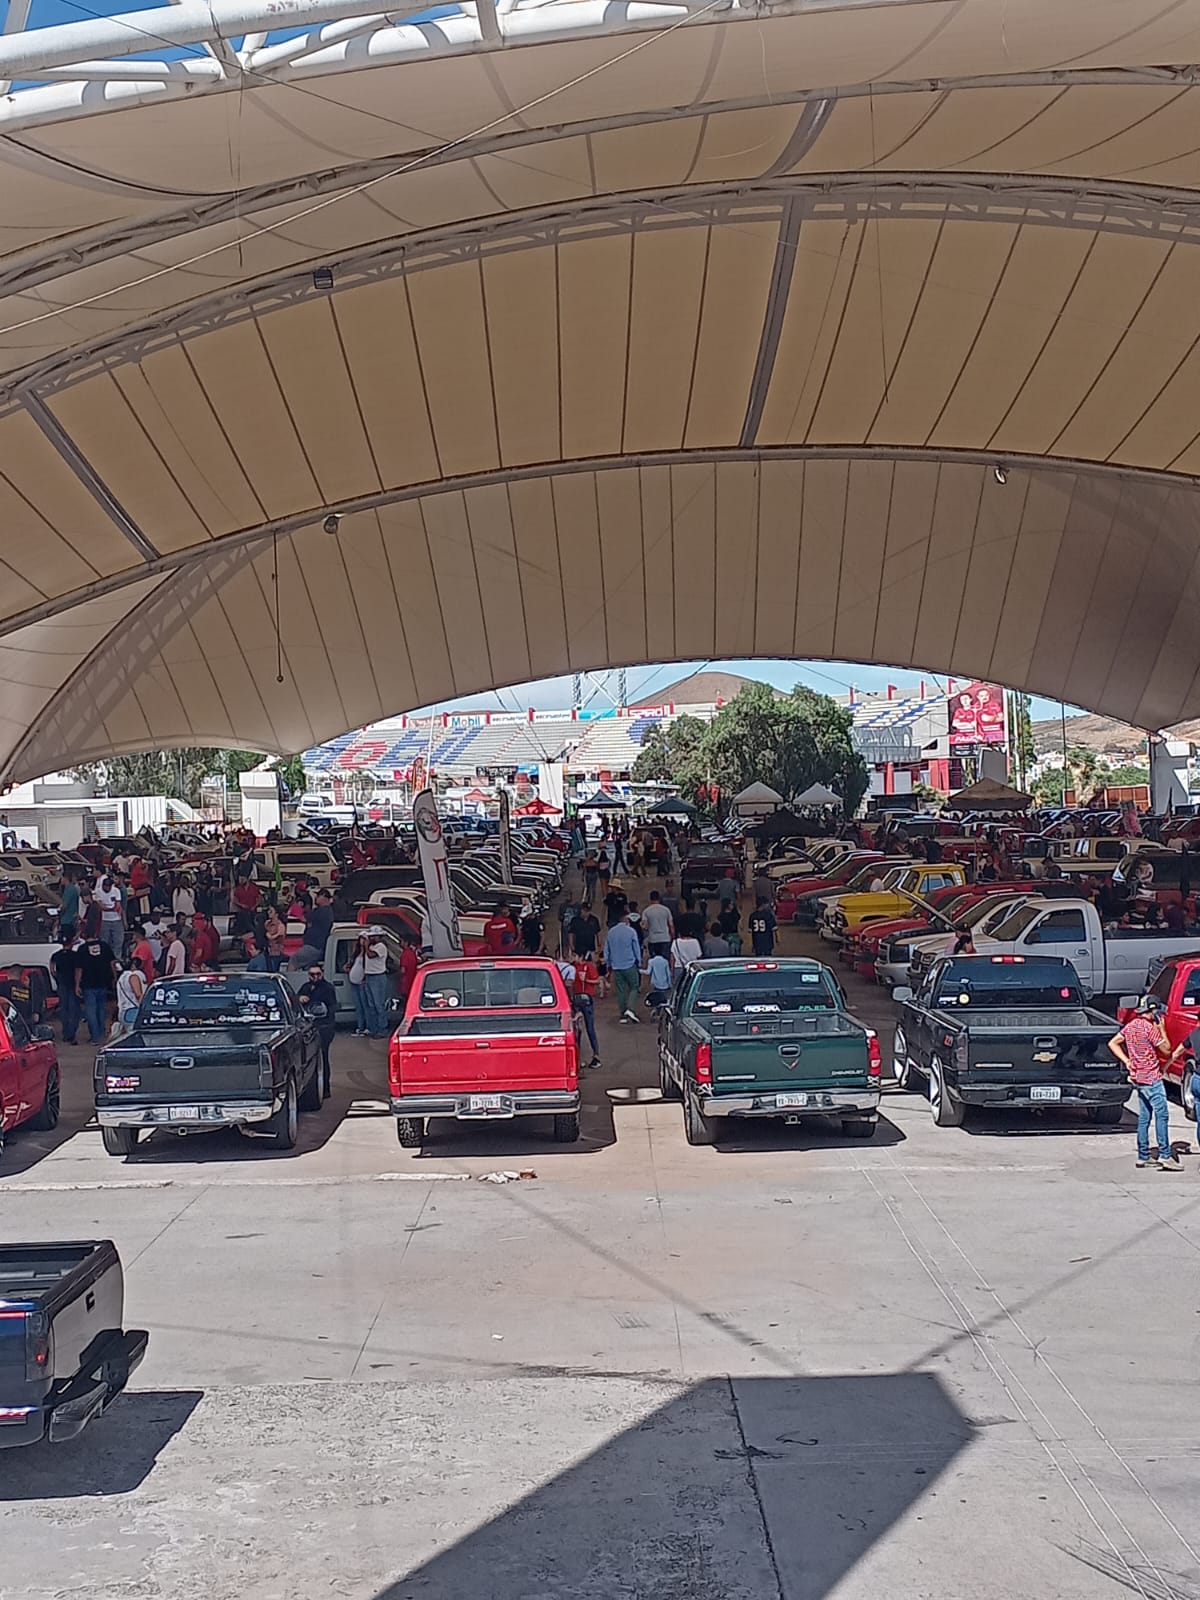 Zacatecas reunió a cientos de aficionados de camionetas modificadas durante el pasado fin de semana